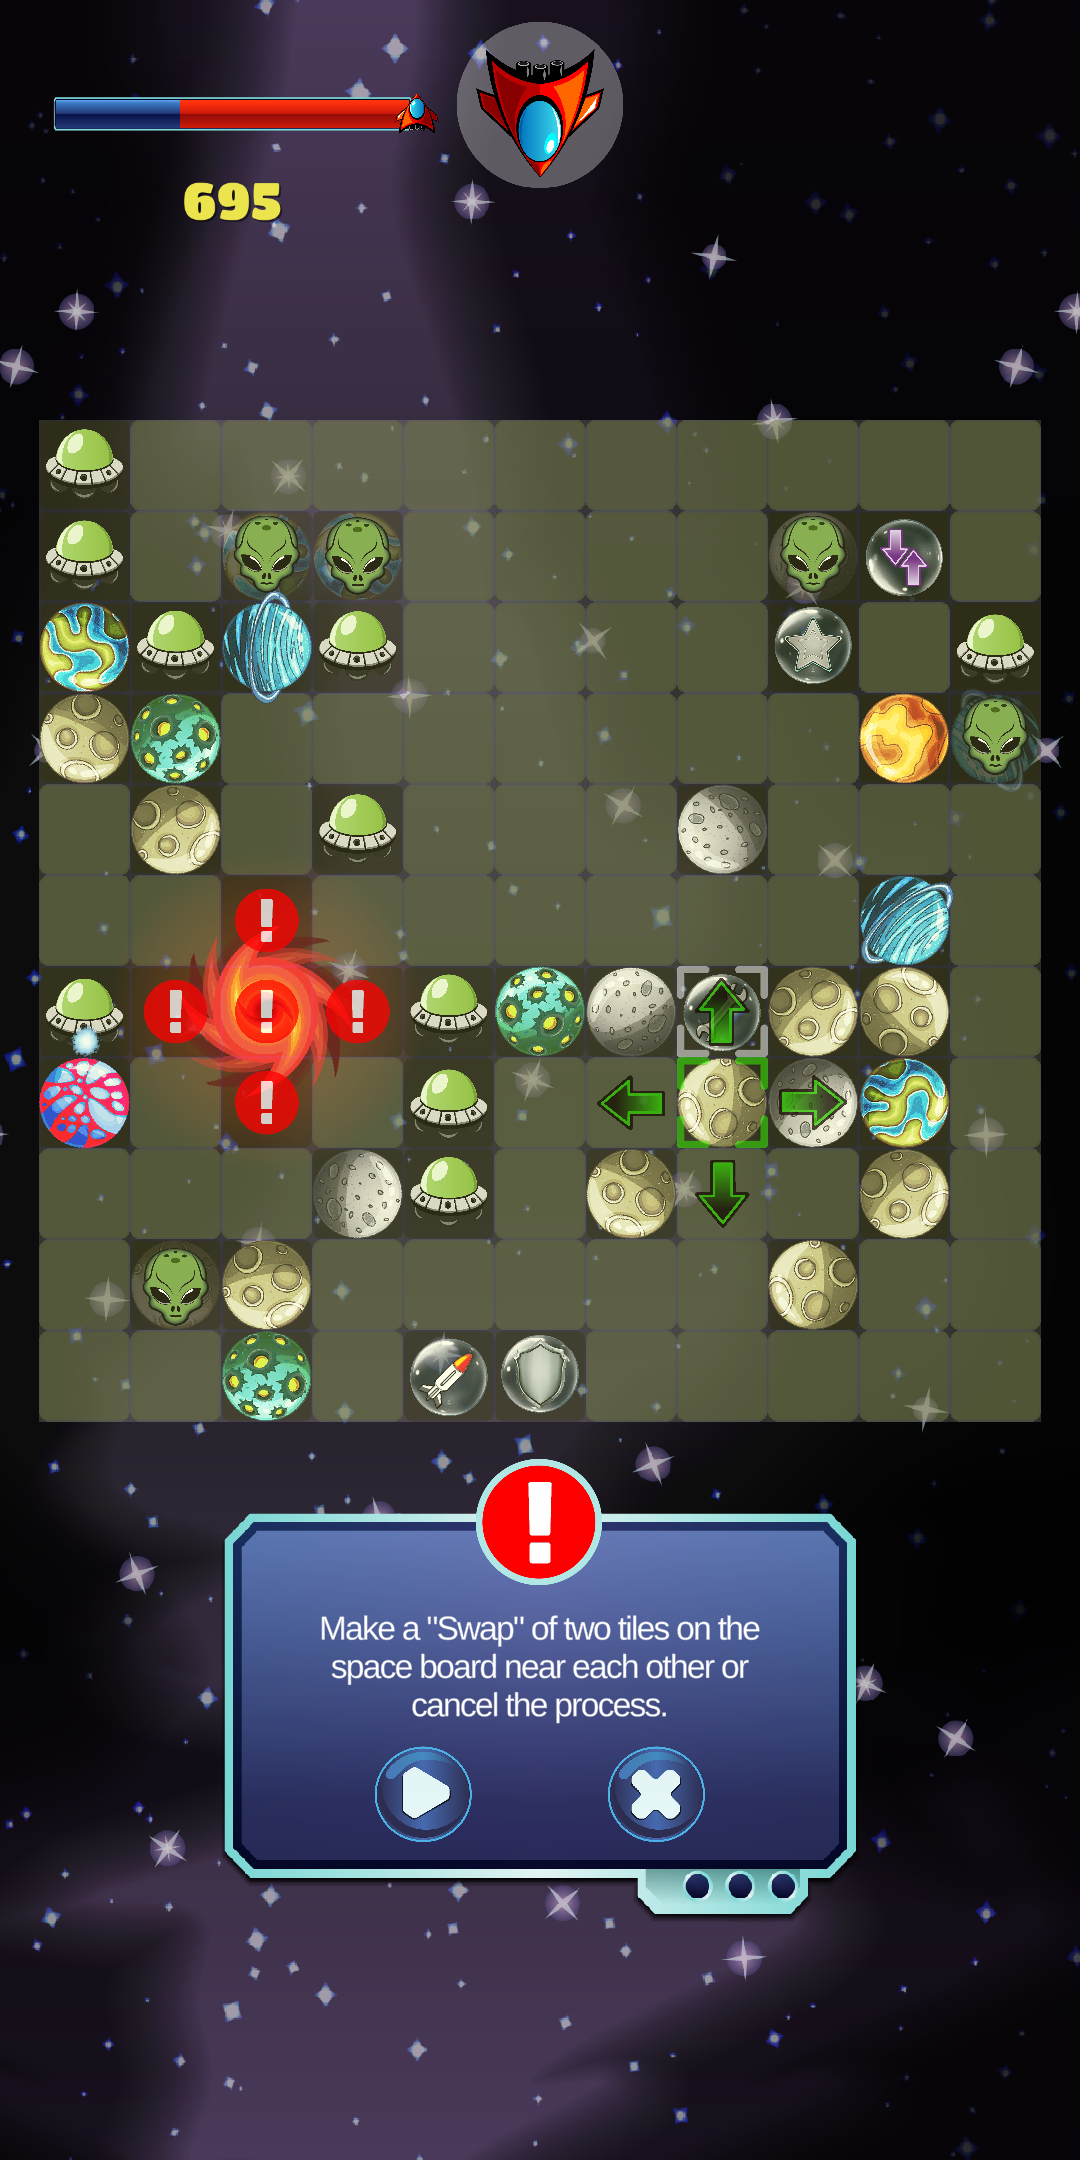 Canados Games - Planets Puzzle